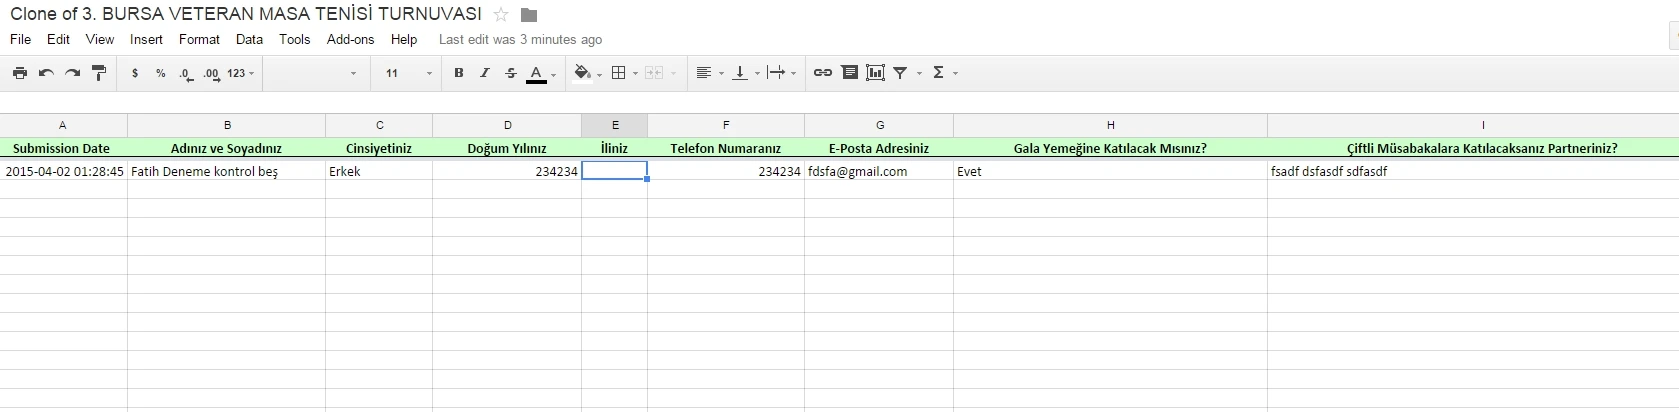 Google spreadsheets integration: Data not being transferred to spreadsheet Image 1 Screenshot 20